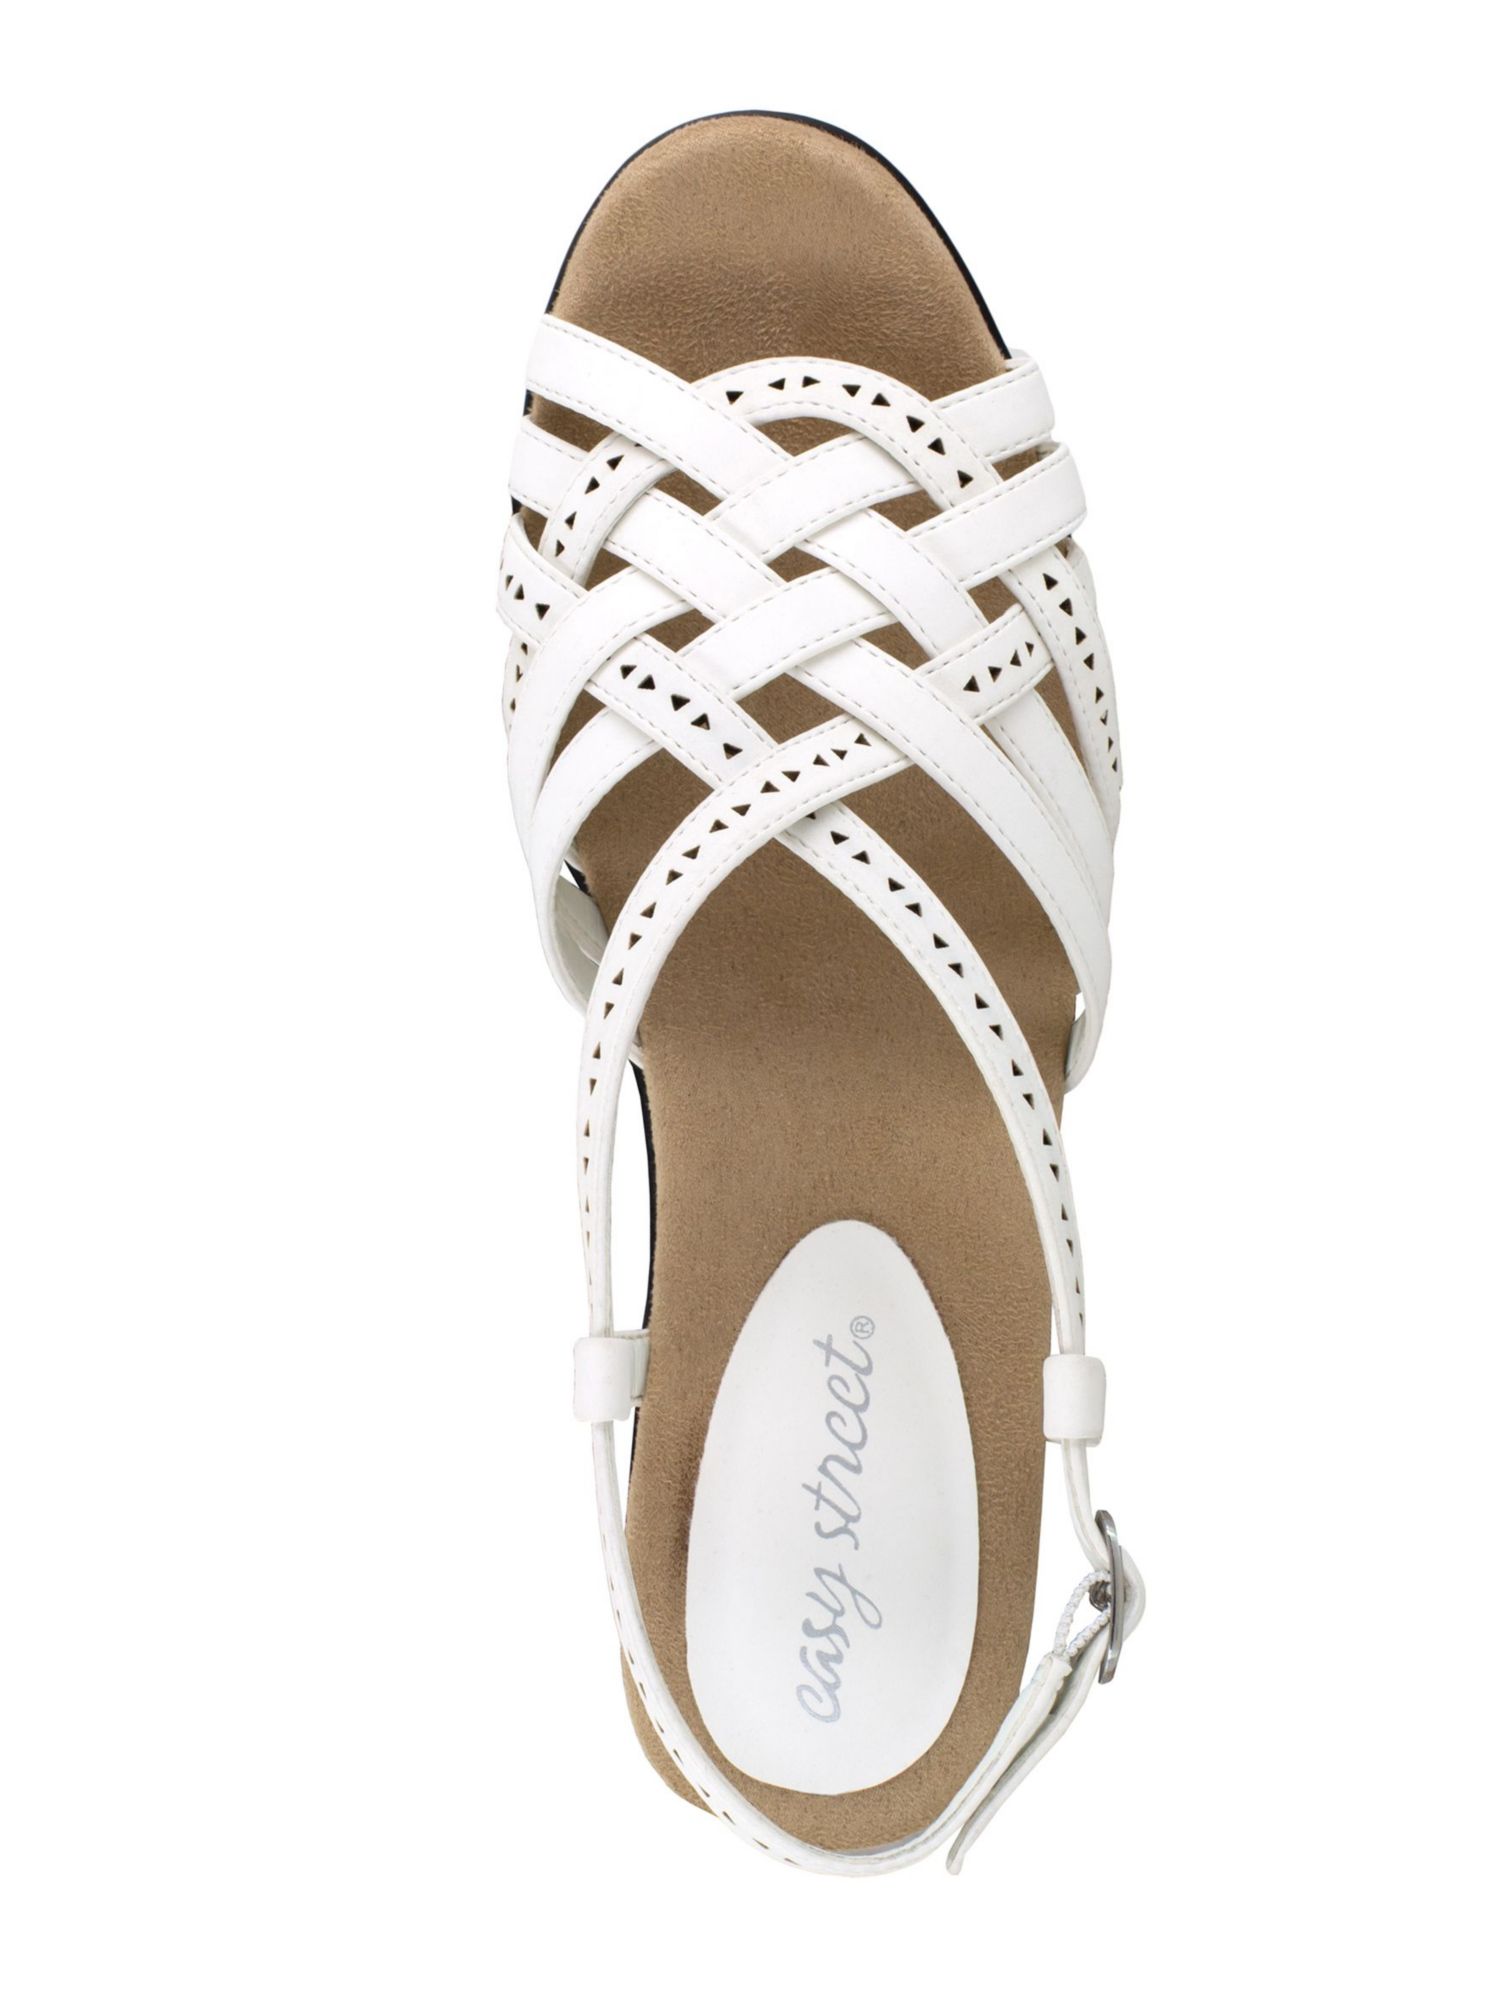 EASY STREET Womens White Woven Adjustable Strappy Jackson Block Heel Sandals 8 M